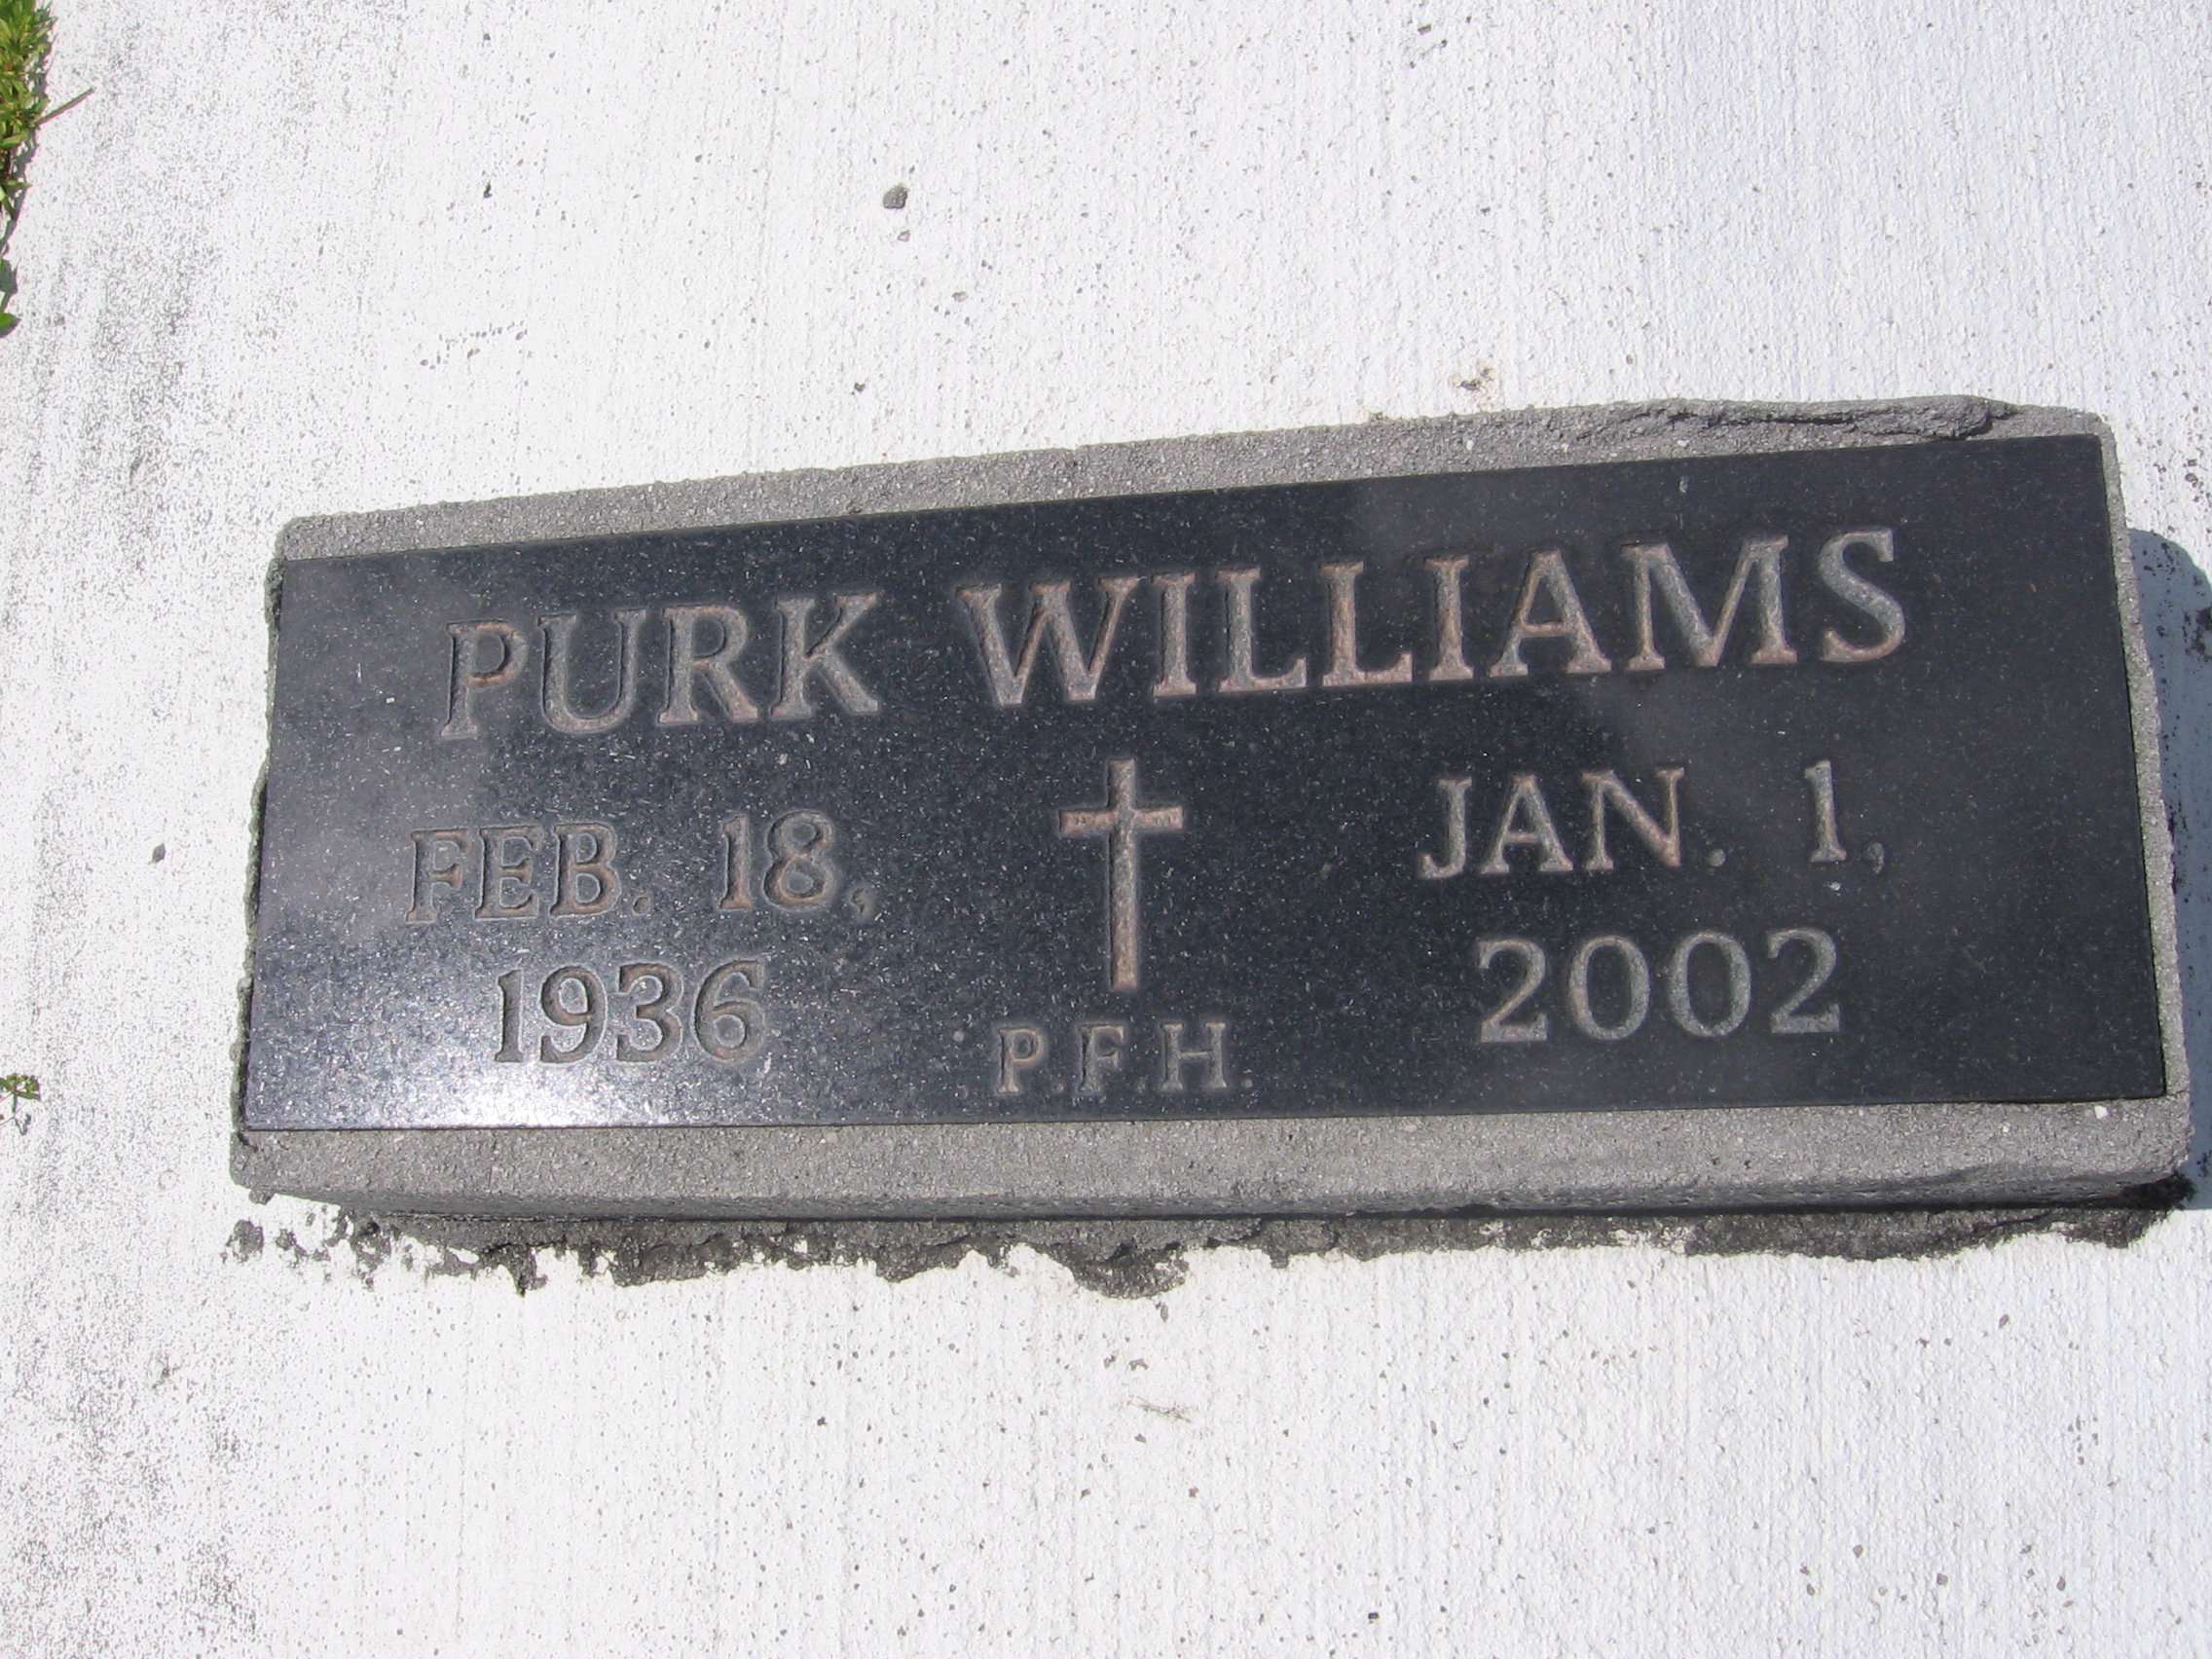 Purk Williams